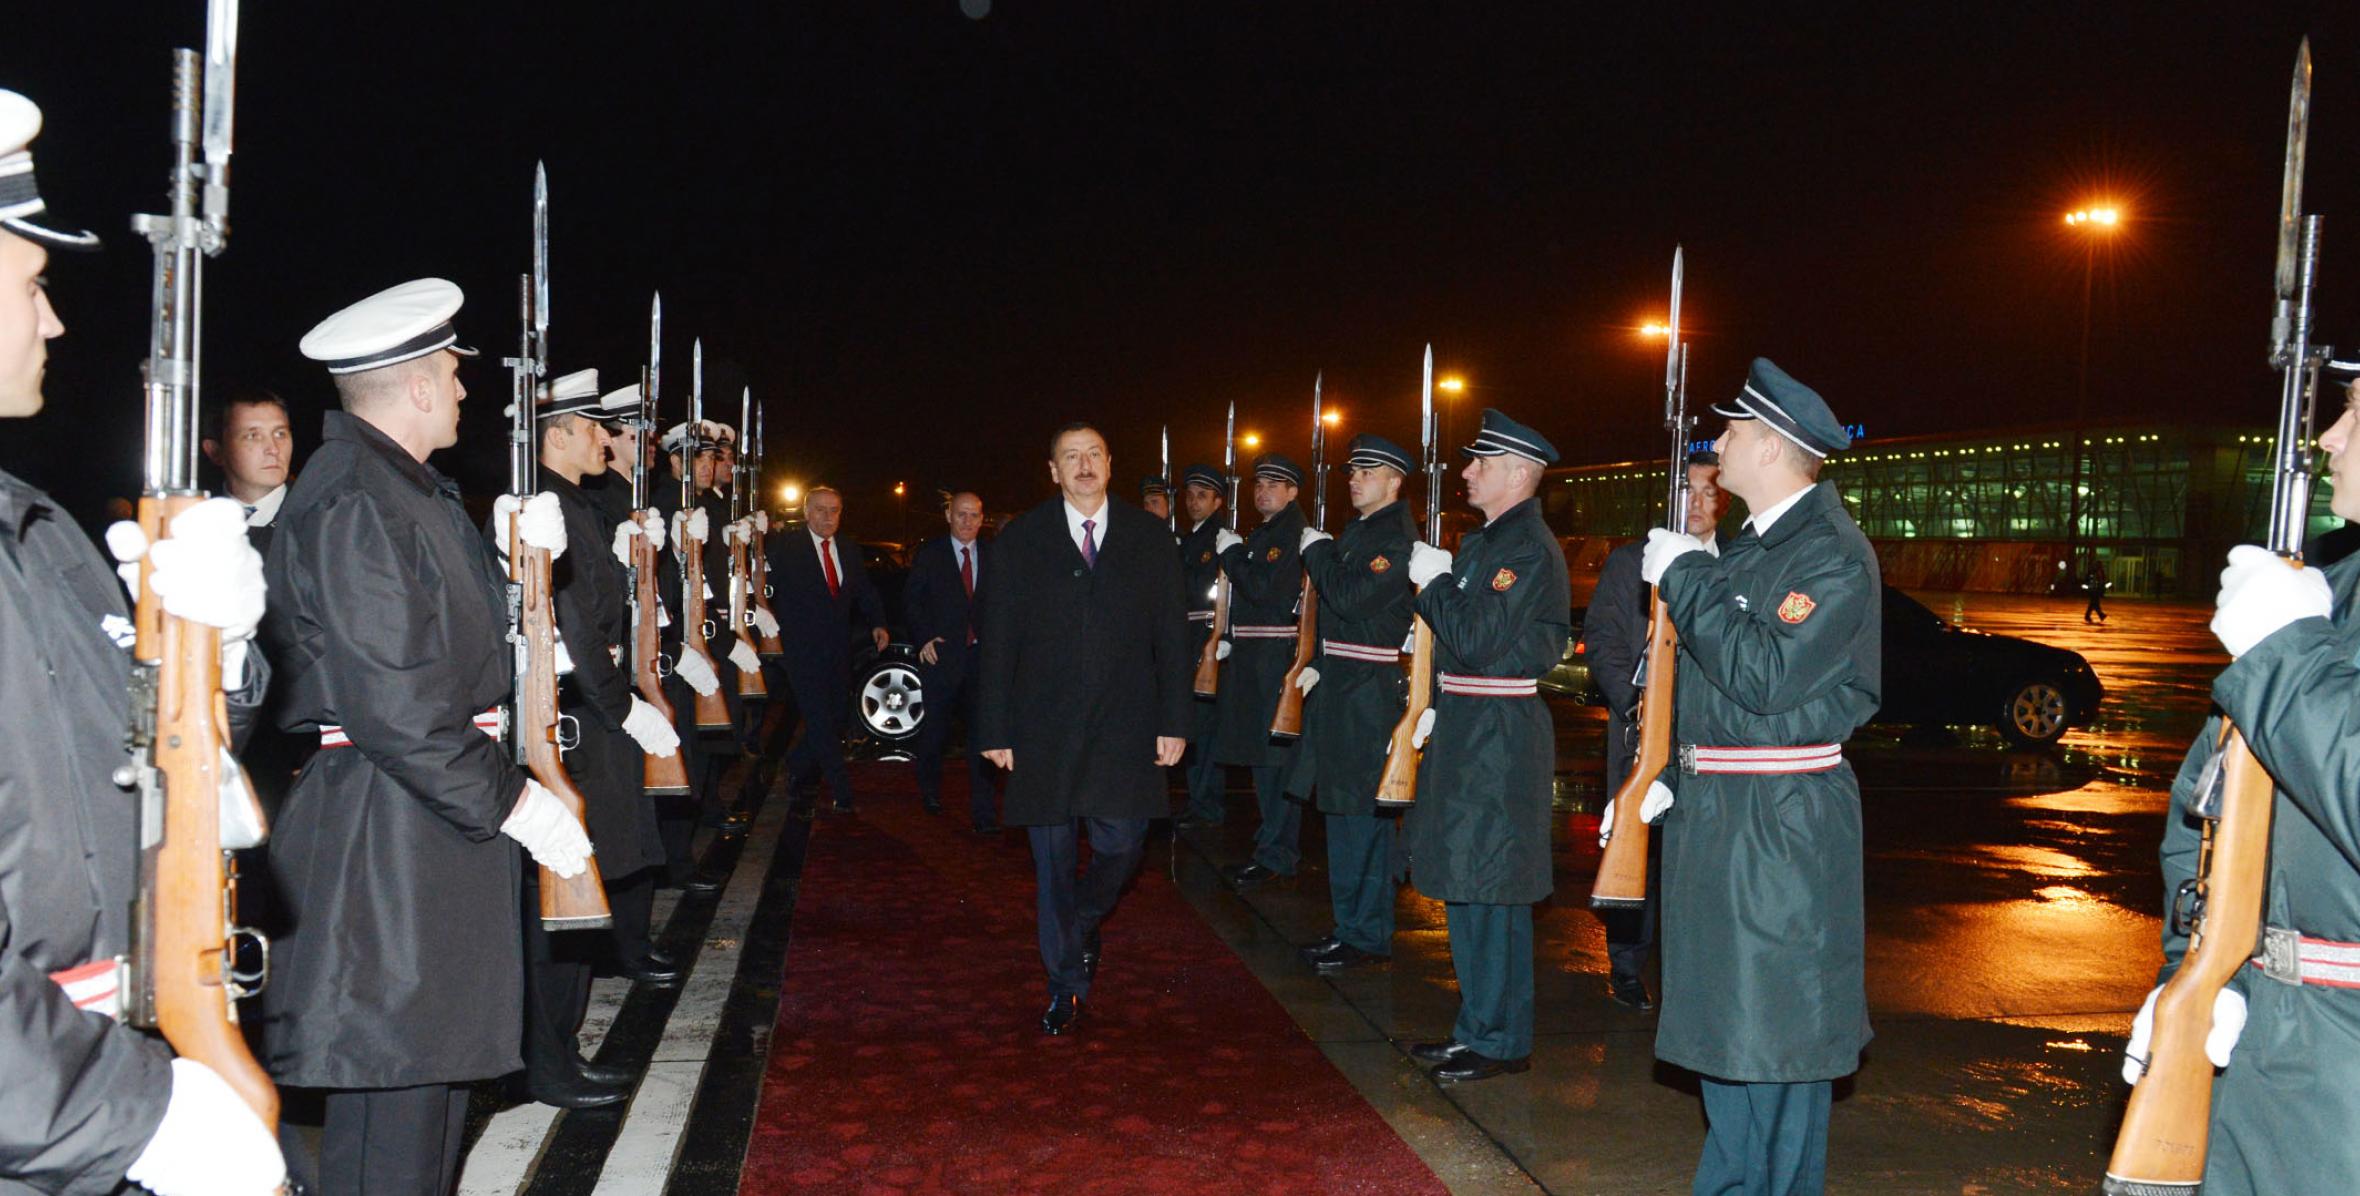 Ilham Aliyev’s visit to Montenegro ended